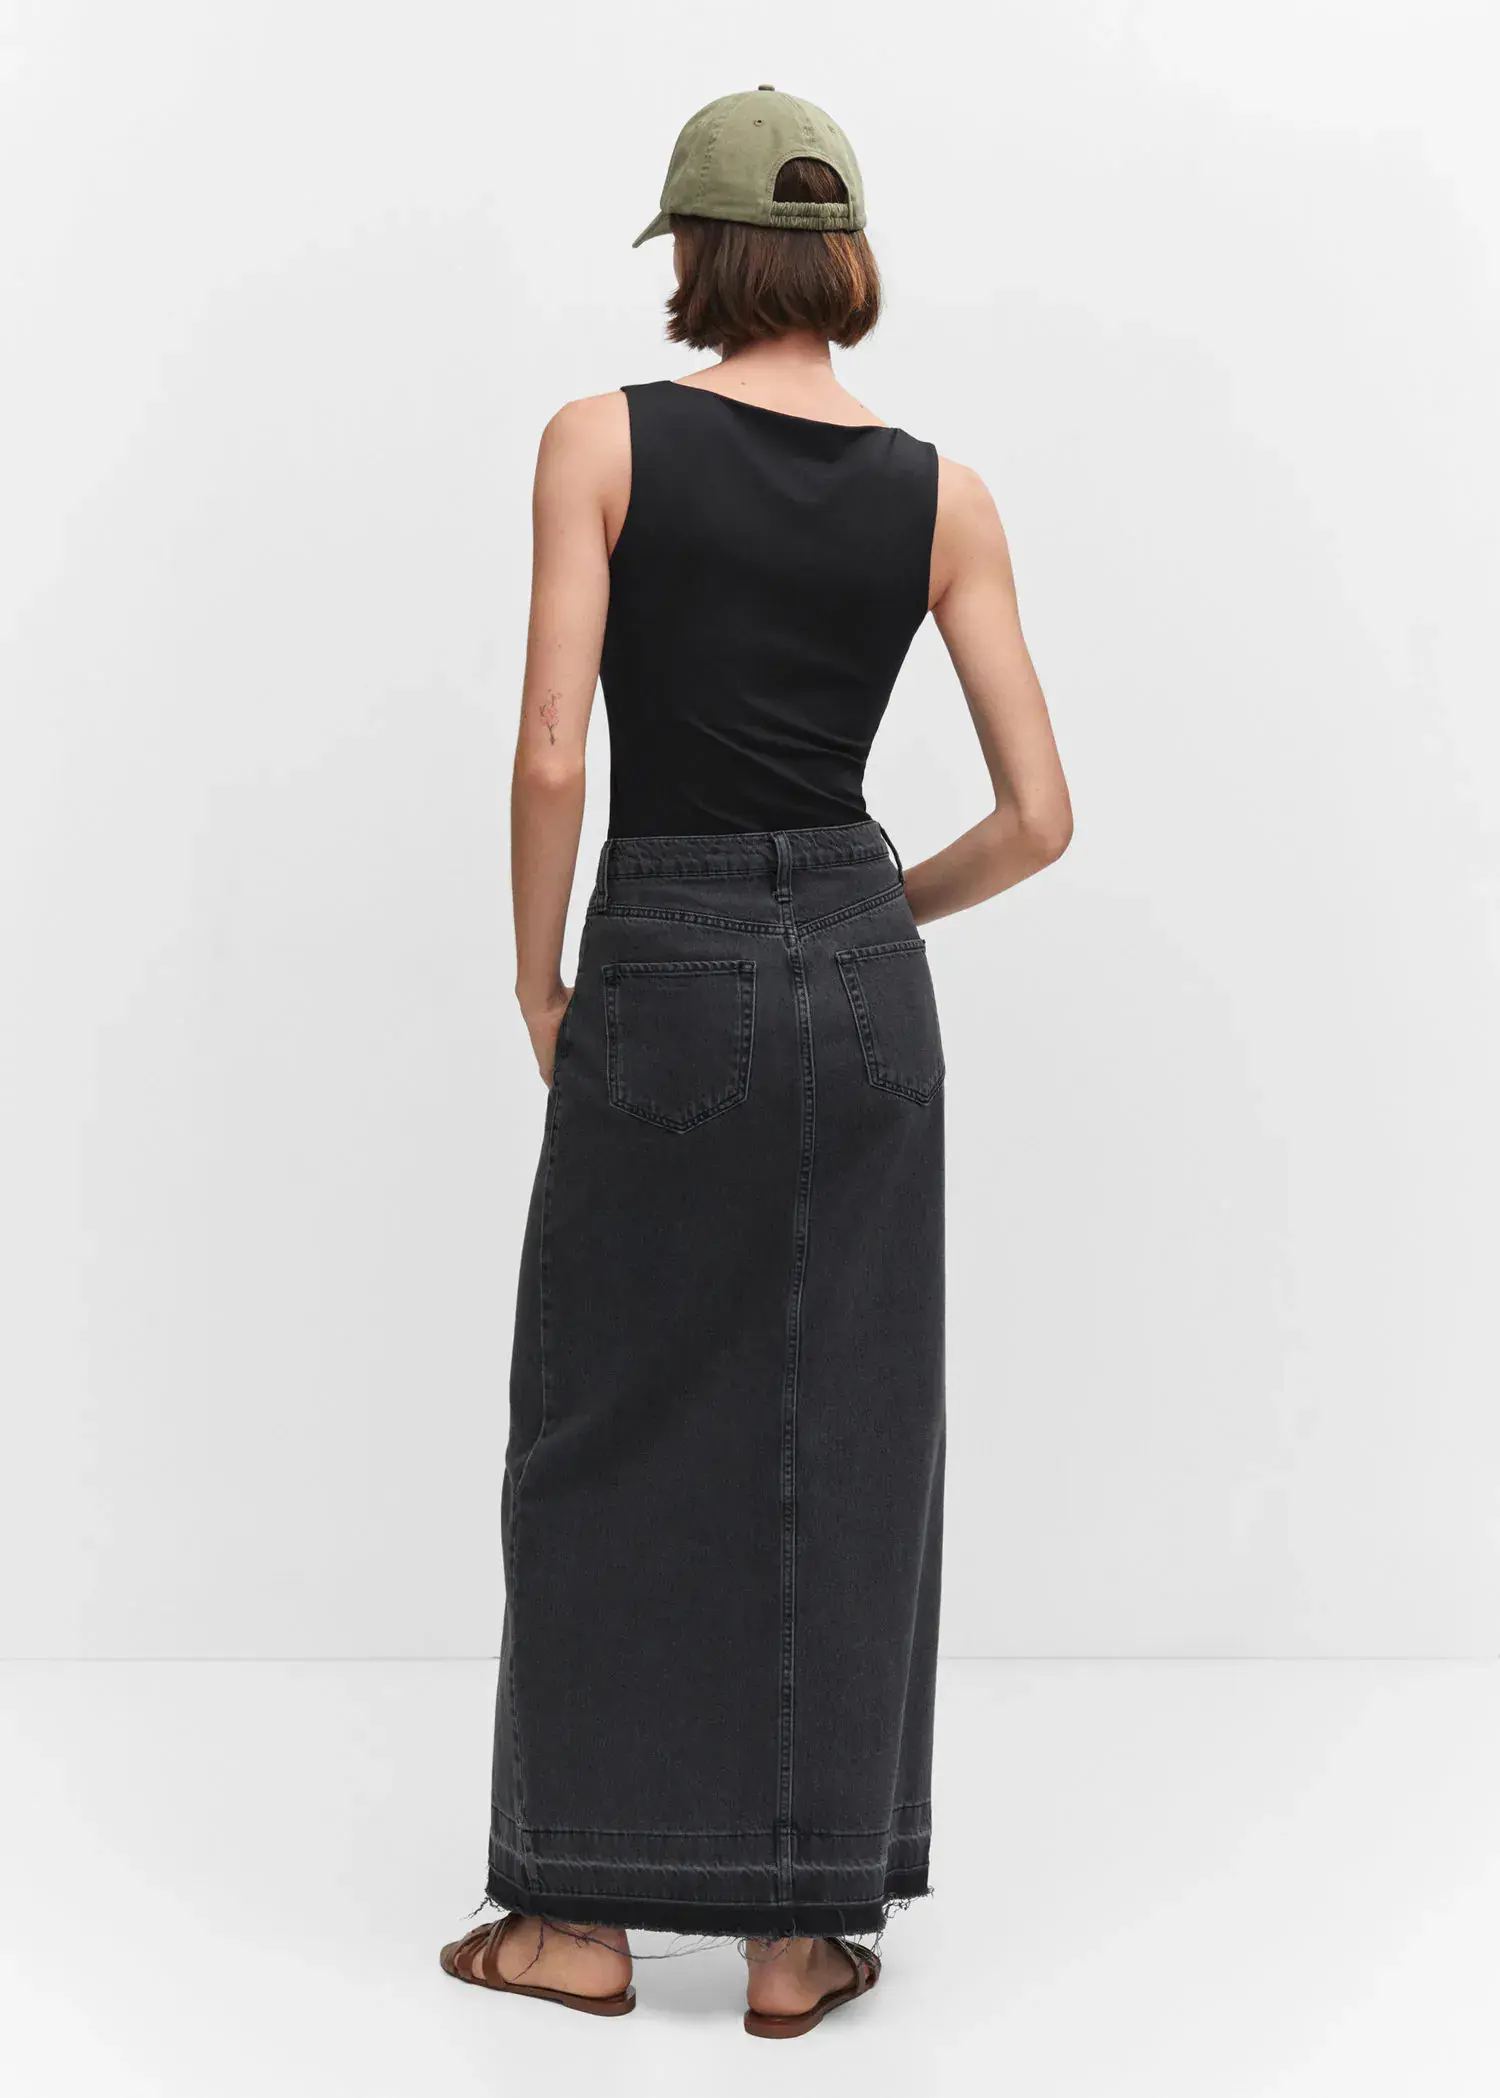 Mango Open elastic top. a woman wearing a black tank top and a long black skirt. 